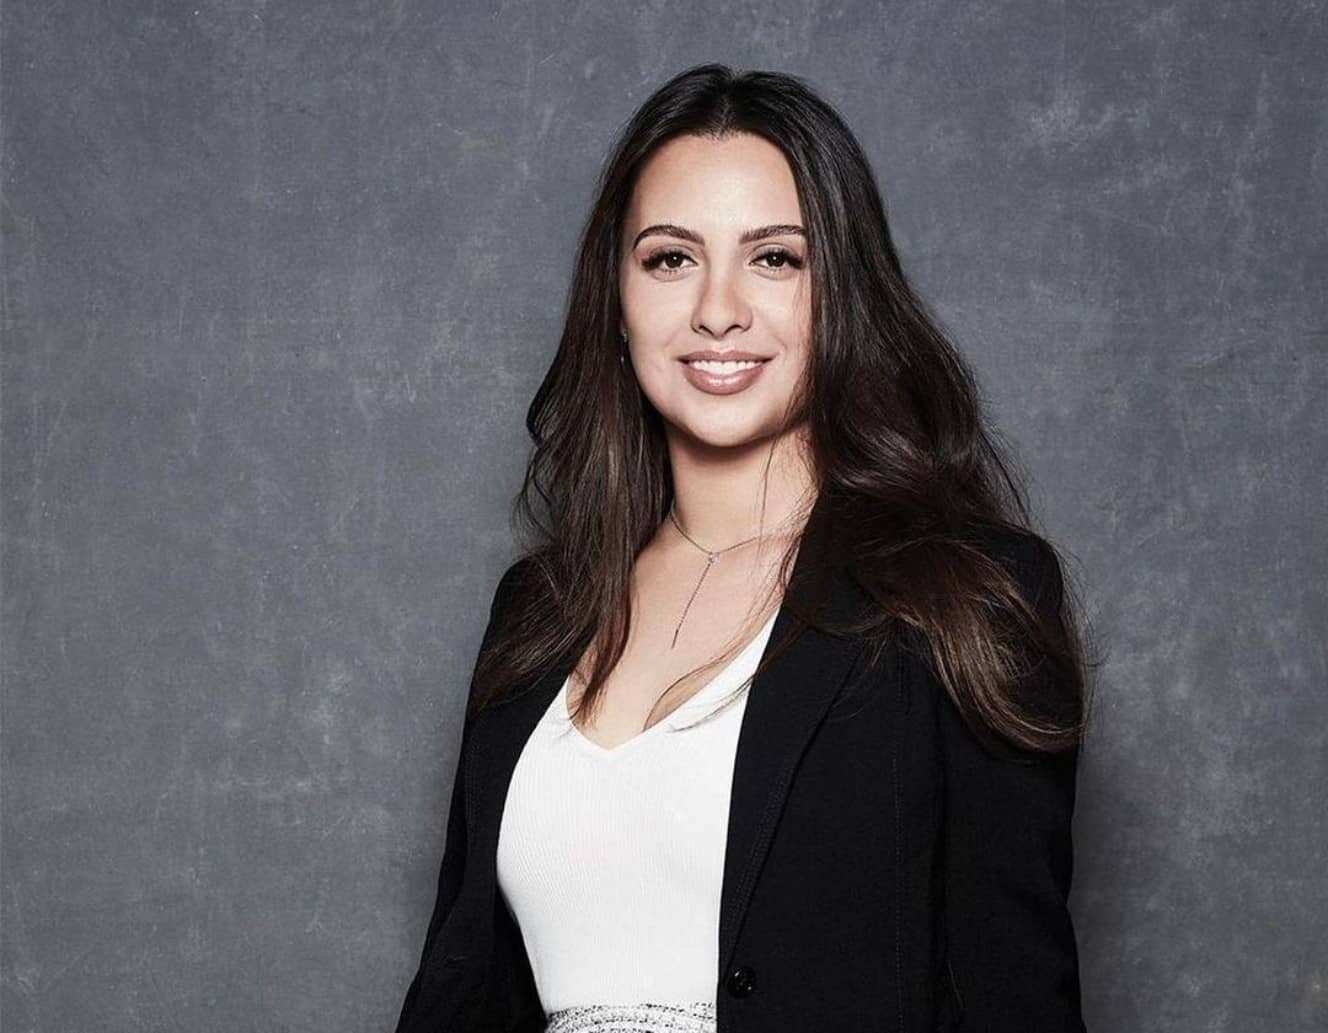 Chantal Mato (Hector Herrera's Wife) Age, Net worth, Entrepreneur